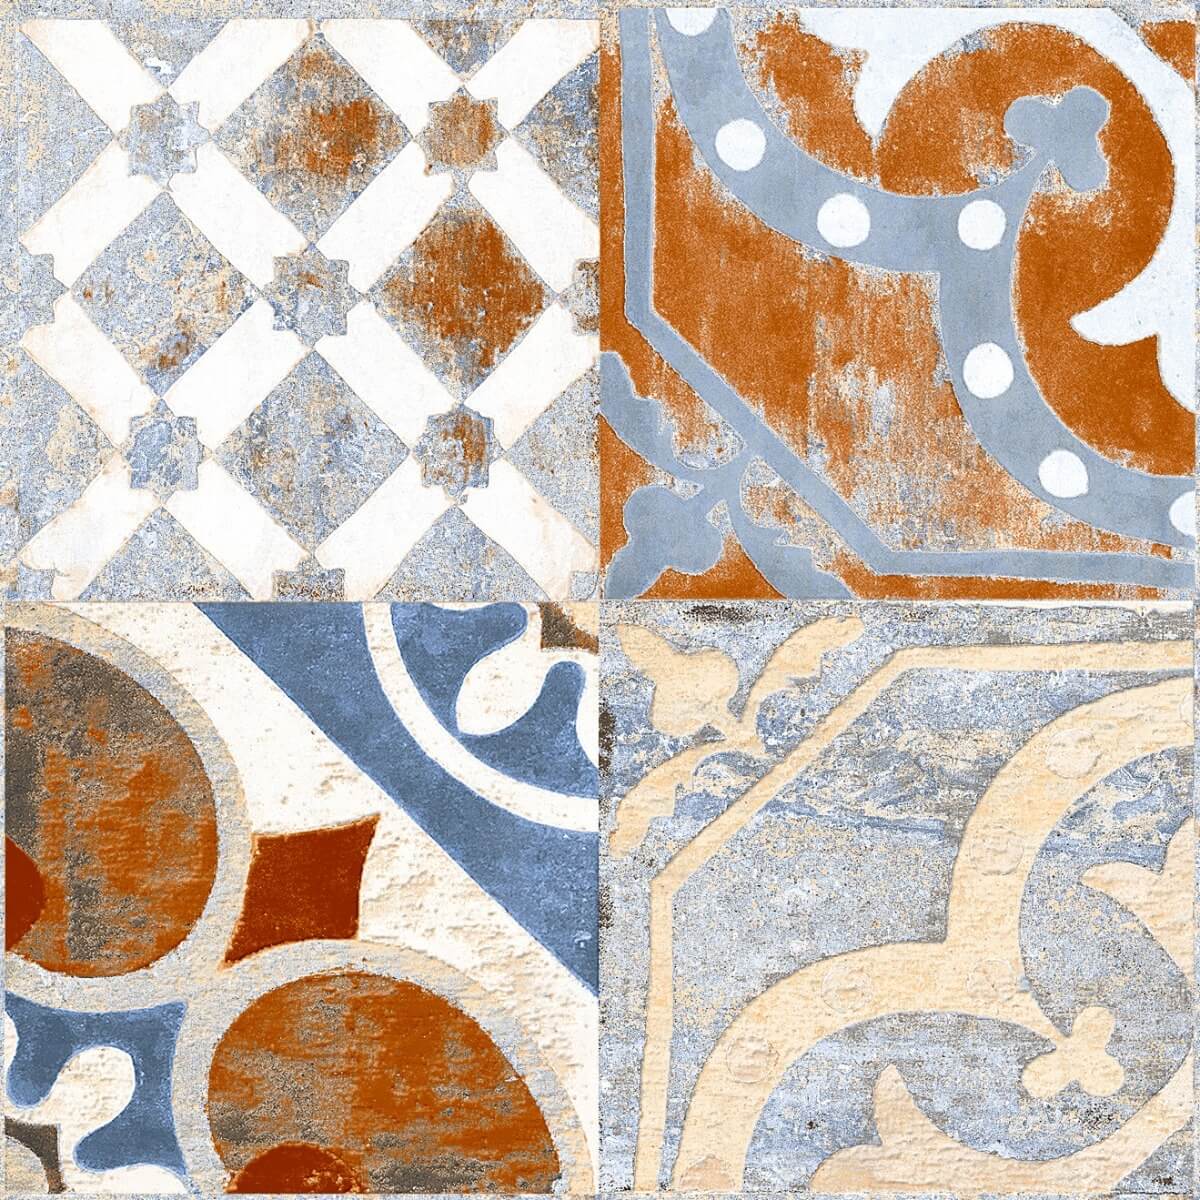 Floor Tiles for Accent Tiles, Dining Room Tiles, Hospital Tiles, Bar/Restaurant, Outdoor Area